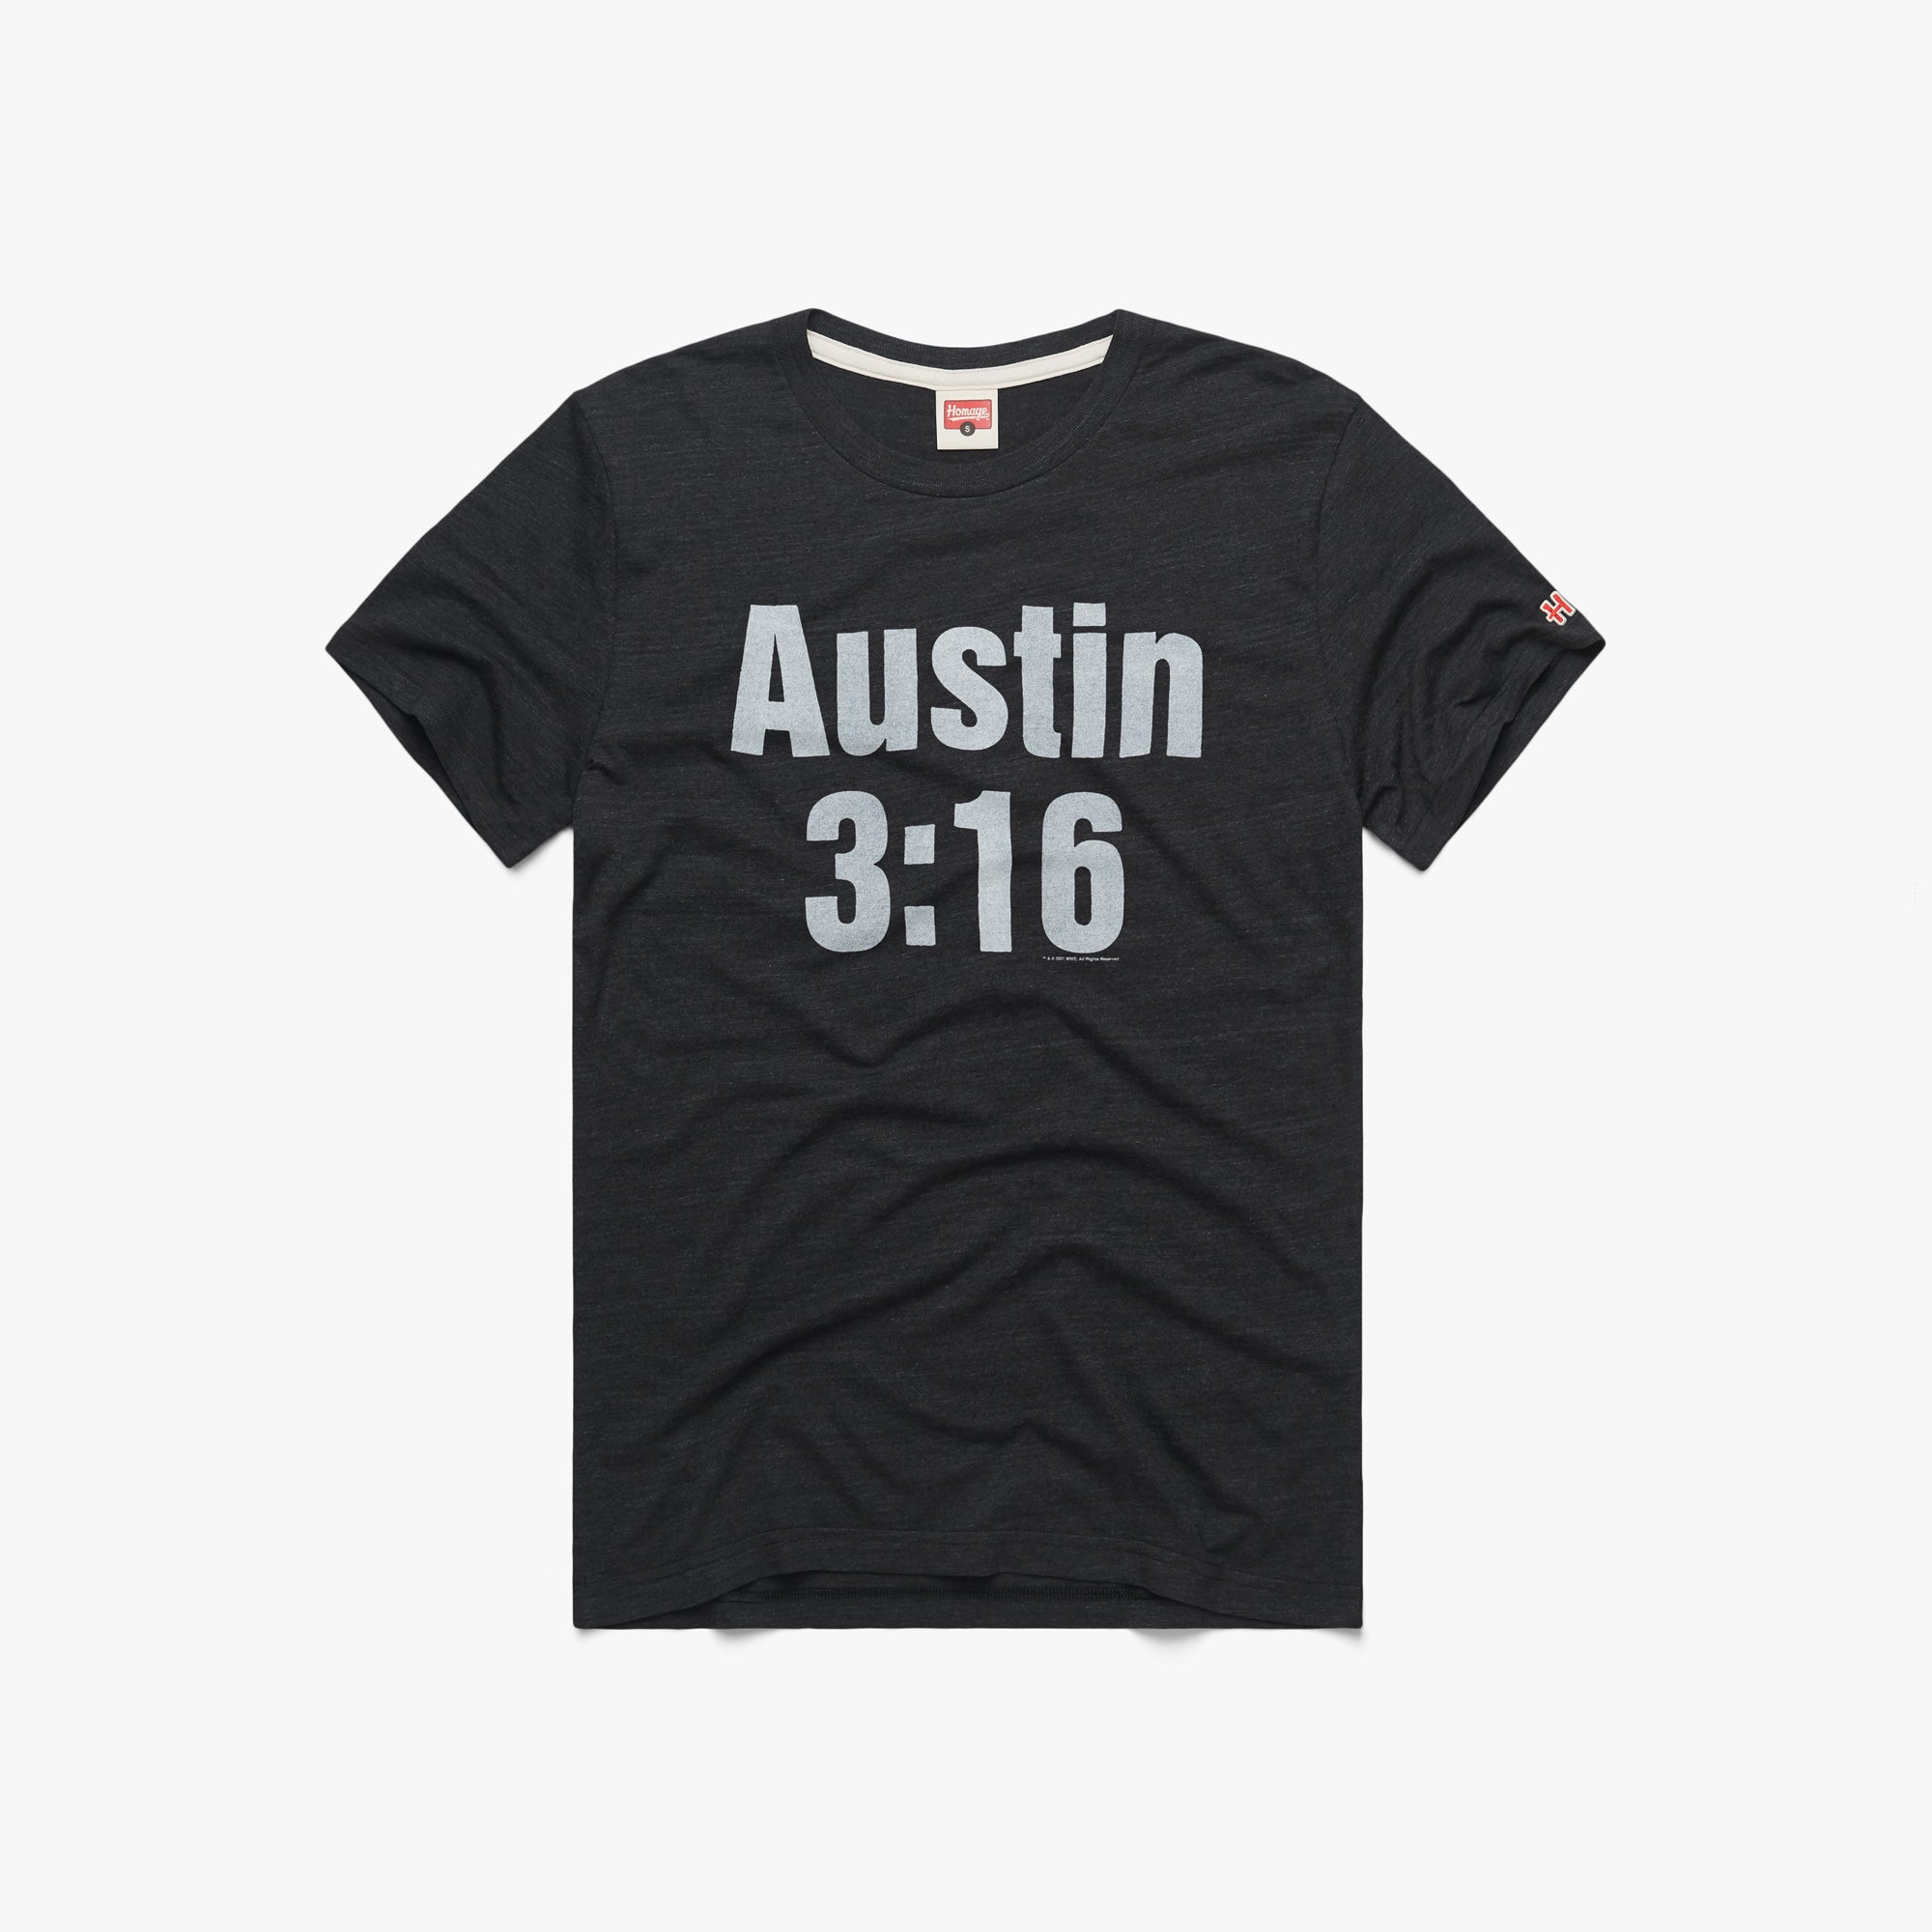 Stone Cold Steve Austin Oakland Athletics Fanatics Branded 3 16 T-shirt